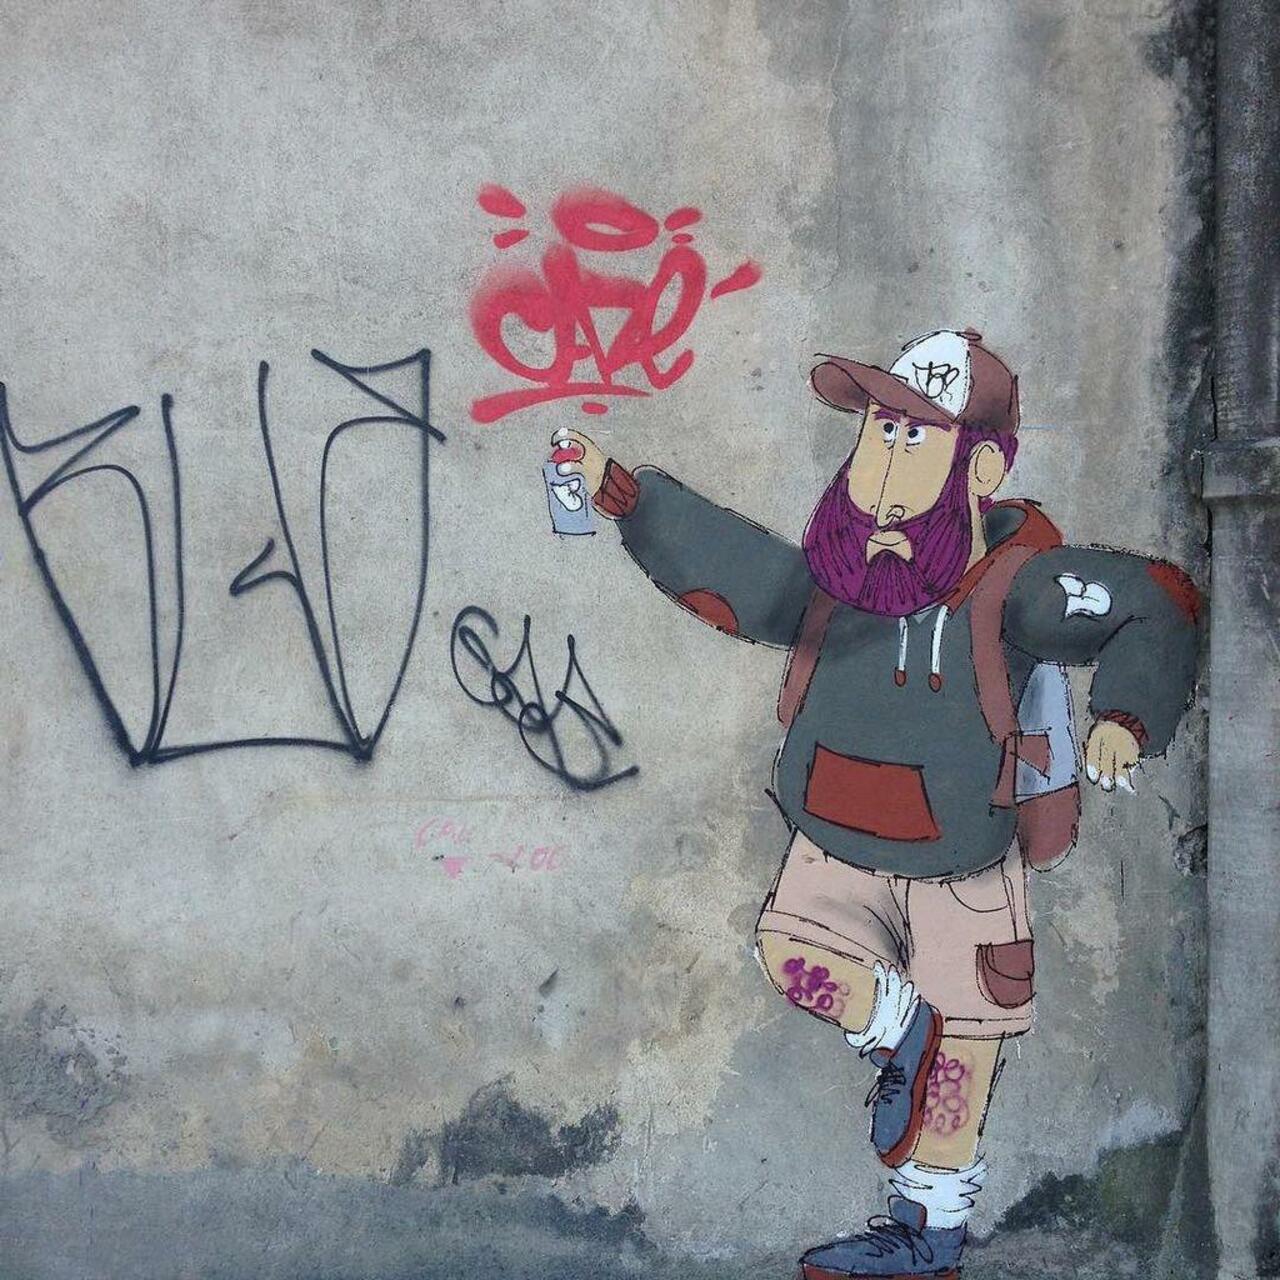 RT @StArtEverywhere: Cazé! #cazesawaya #barbudinhoo #streetart #streetartrio #streetartphoto #charactergraffiti #graffiti #ink #spray #l… http://t.co/JowVIRjJsp